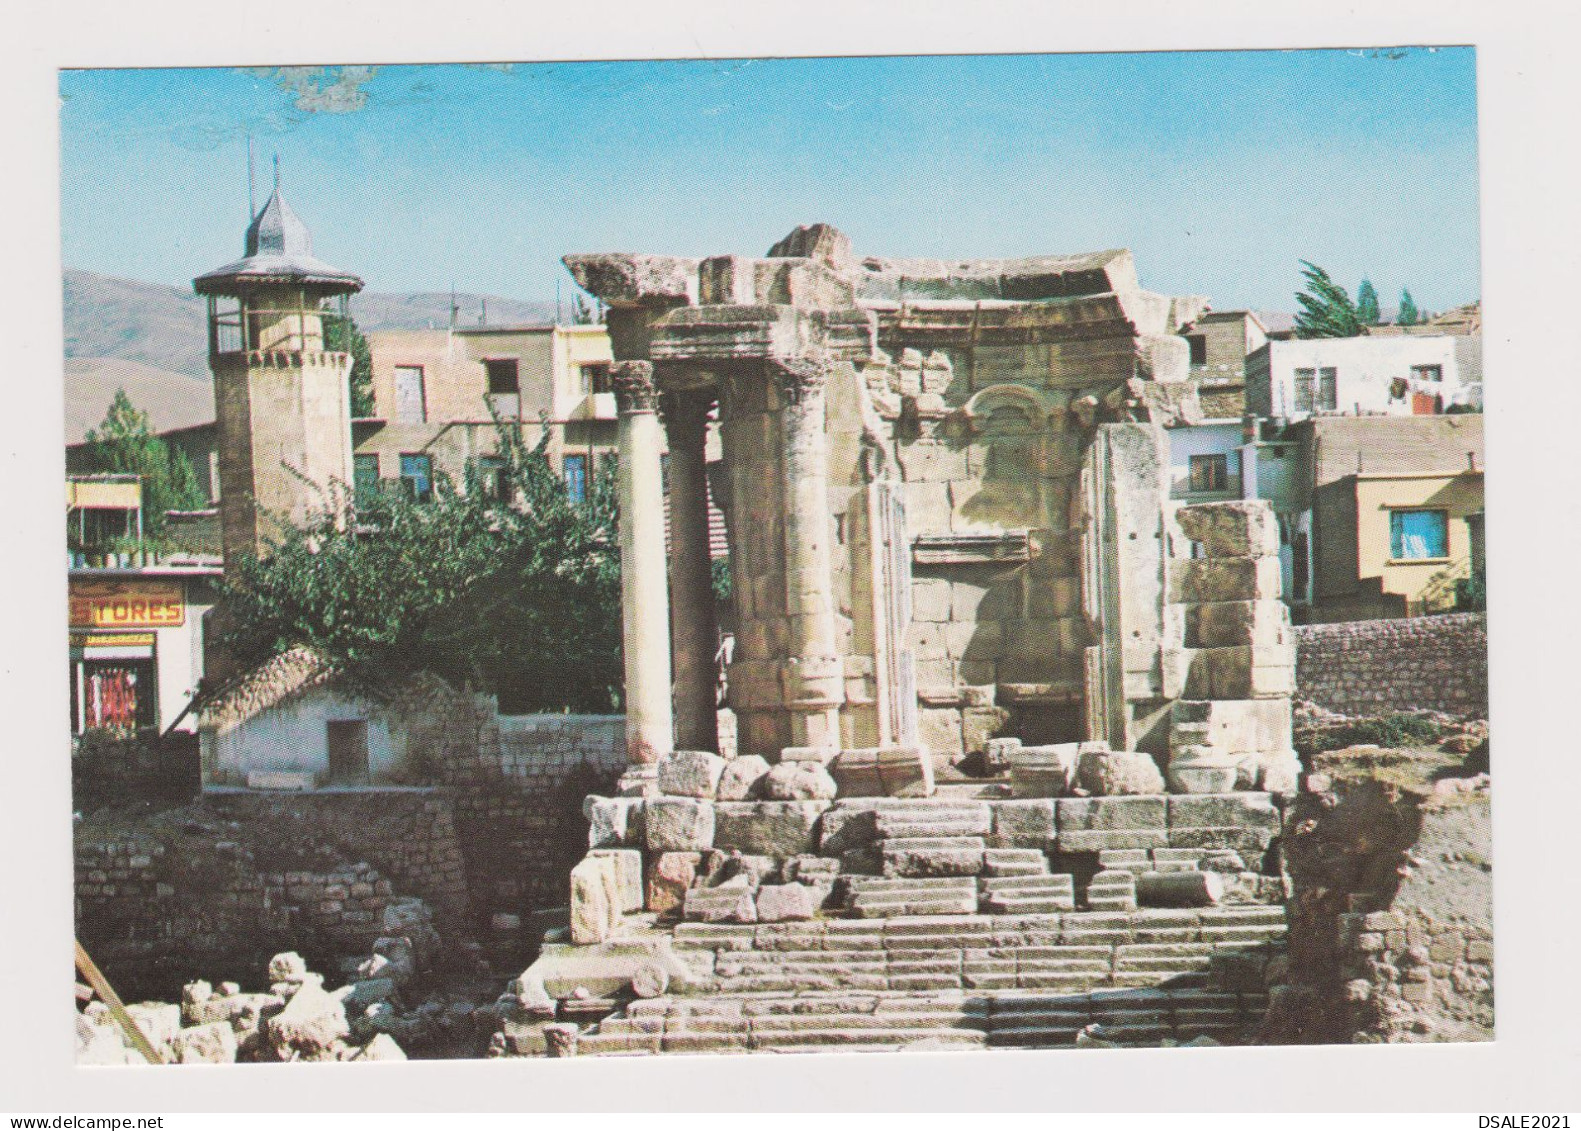 Lebanon Libanon Liban Baalbek-Heliopolis Venus Temple Ruins View, Vintage Photo Postcard RPPc AK (1200) - Lebanon